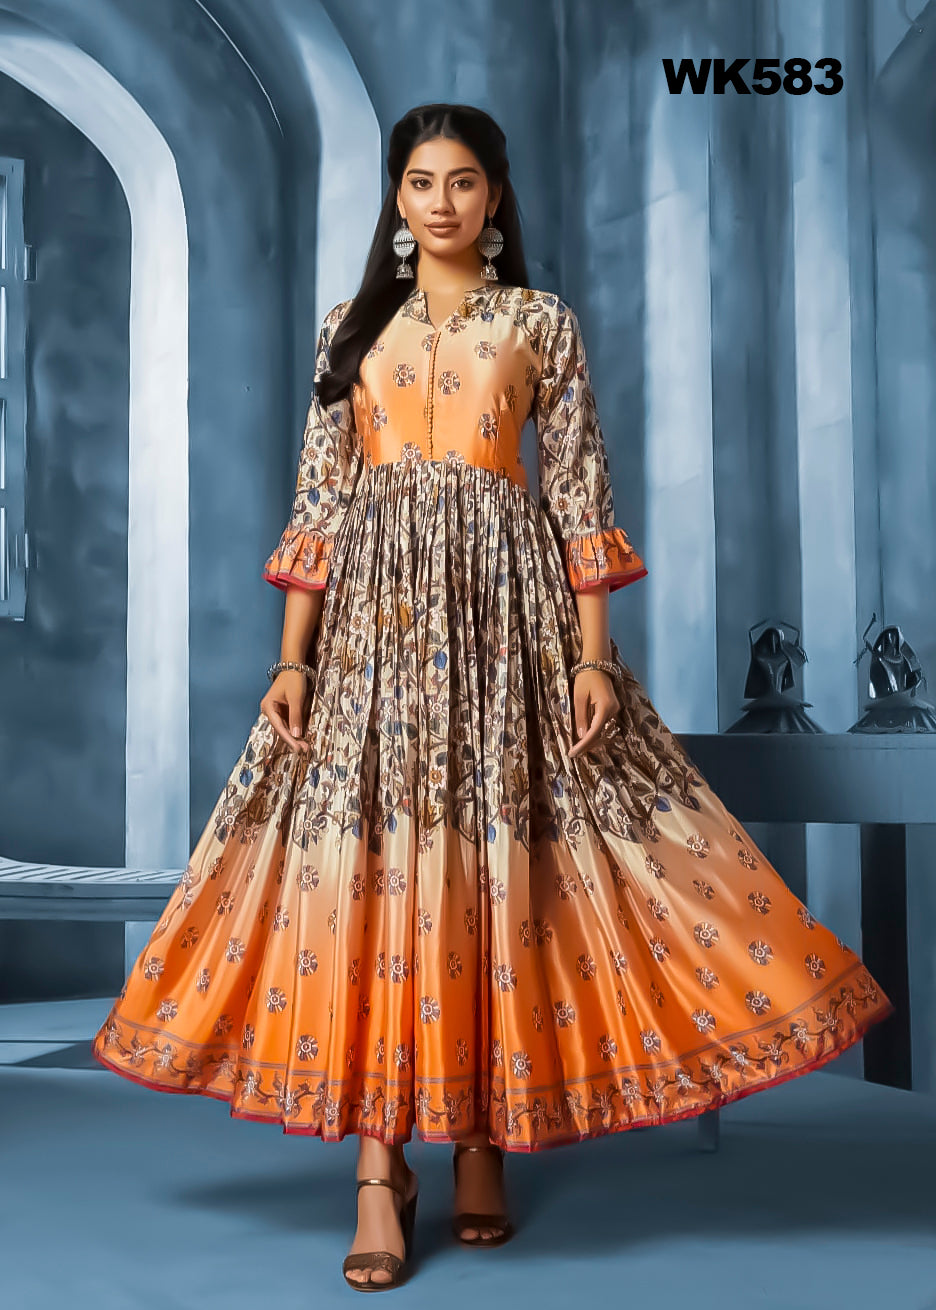 WK583 - Orange shaded Floral printed Anarkali Kurti dress